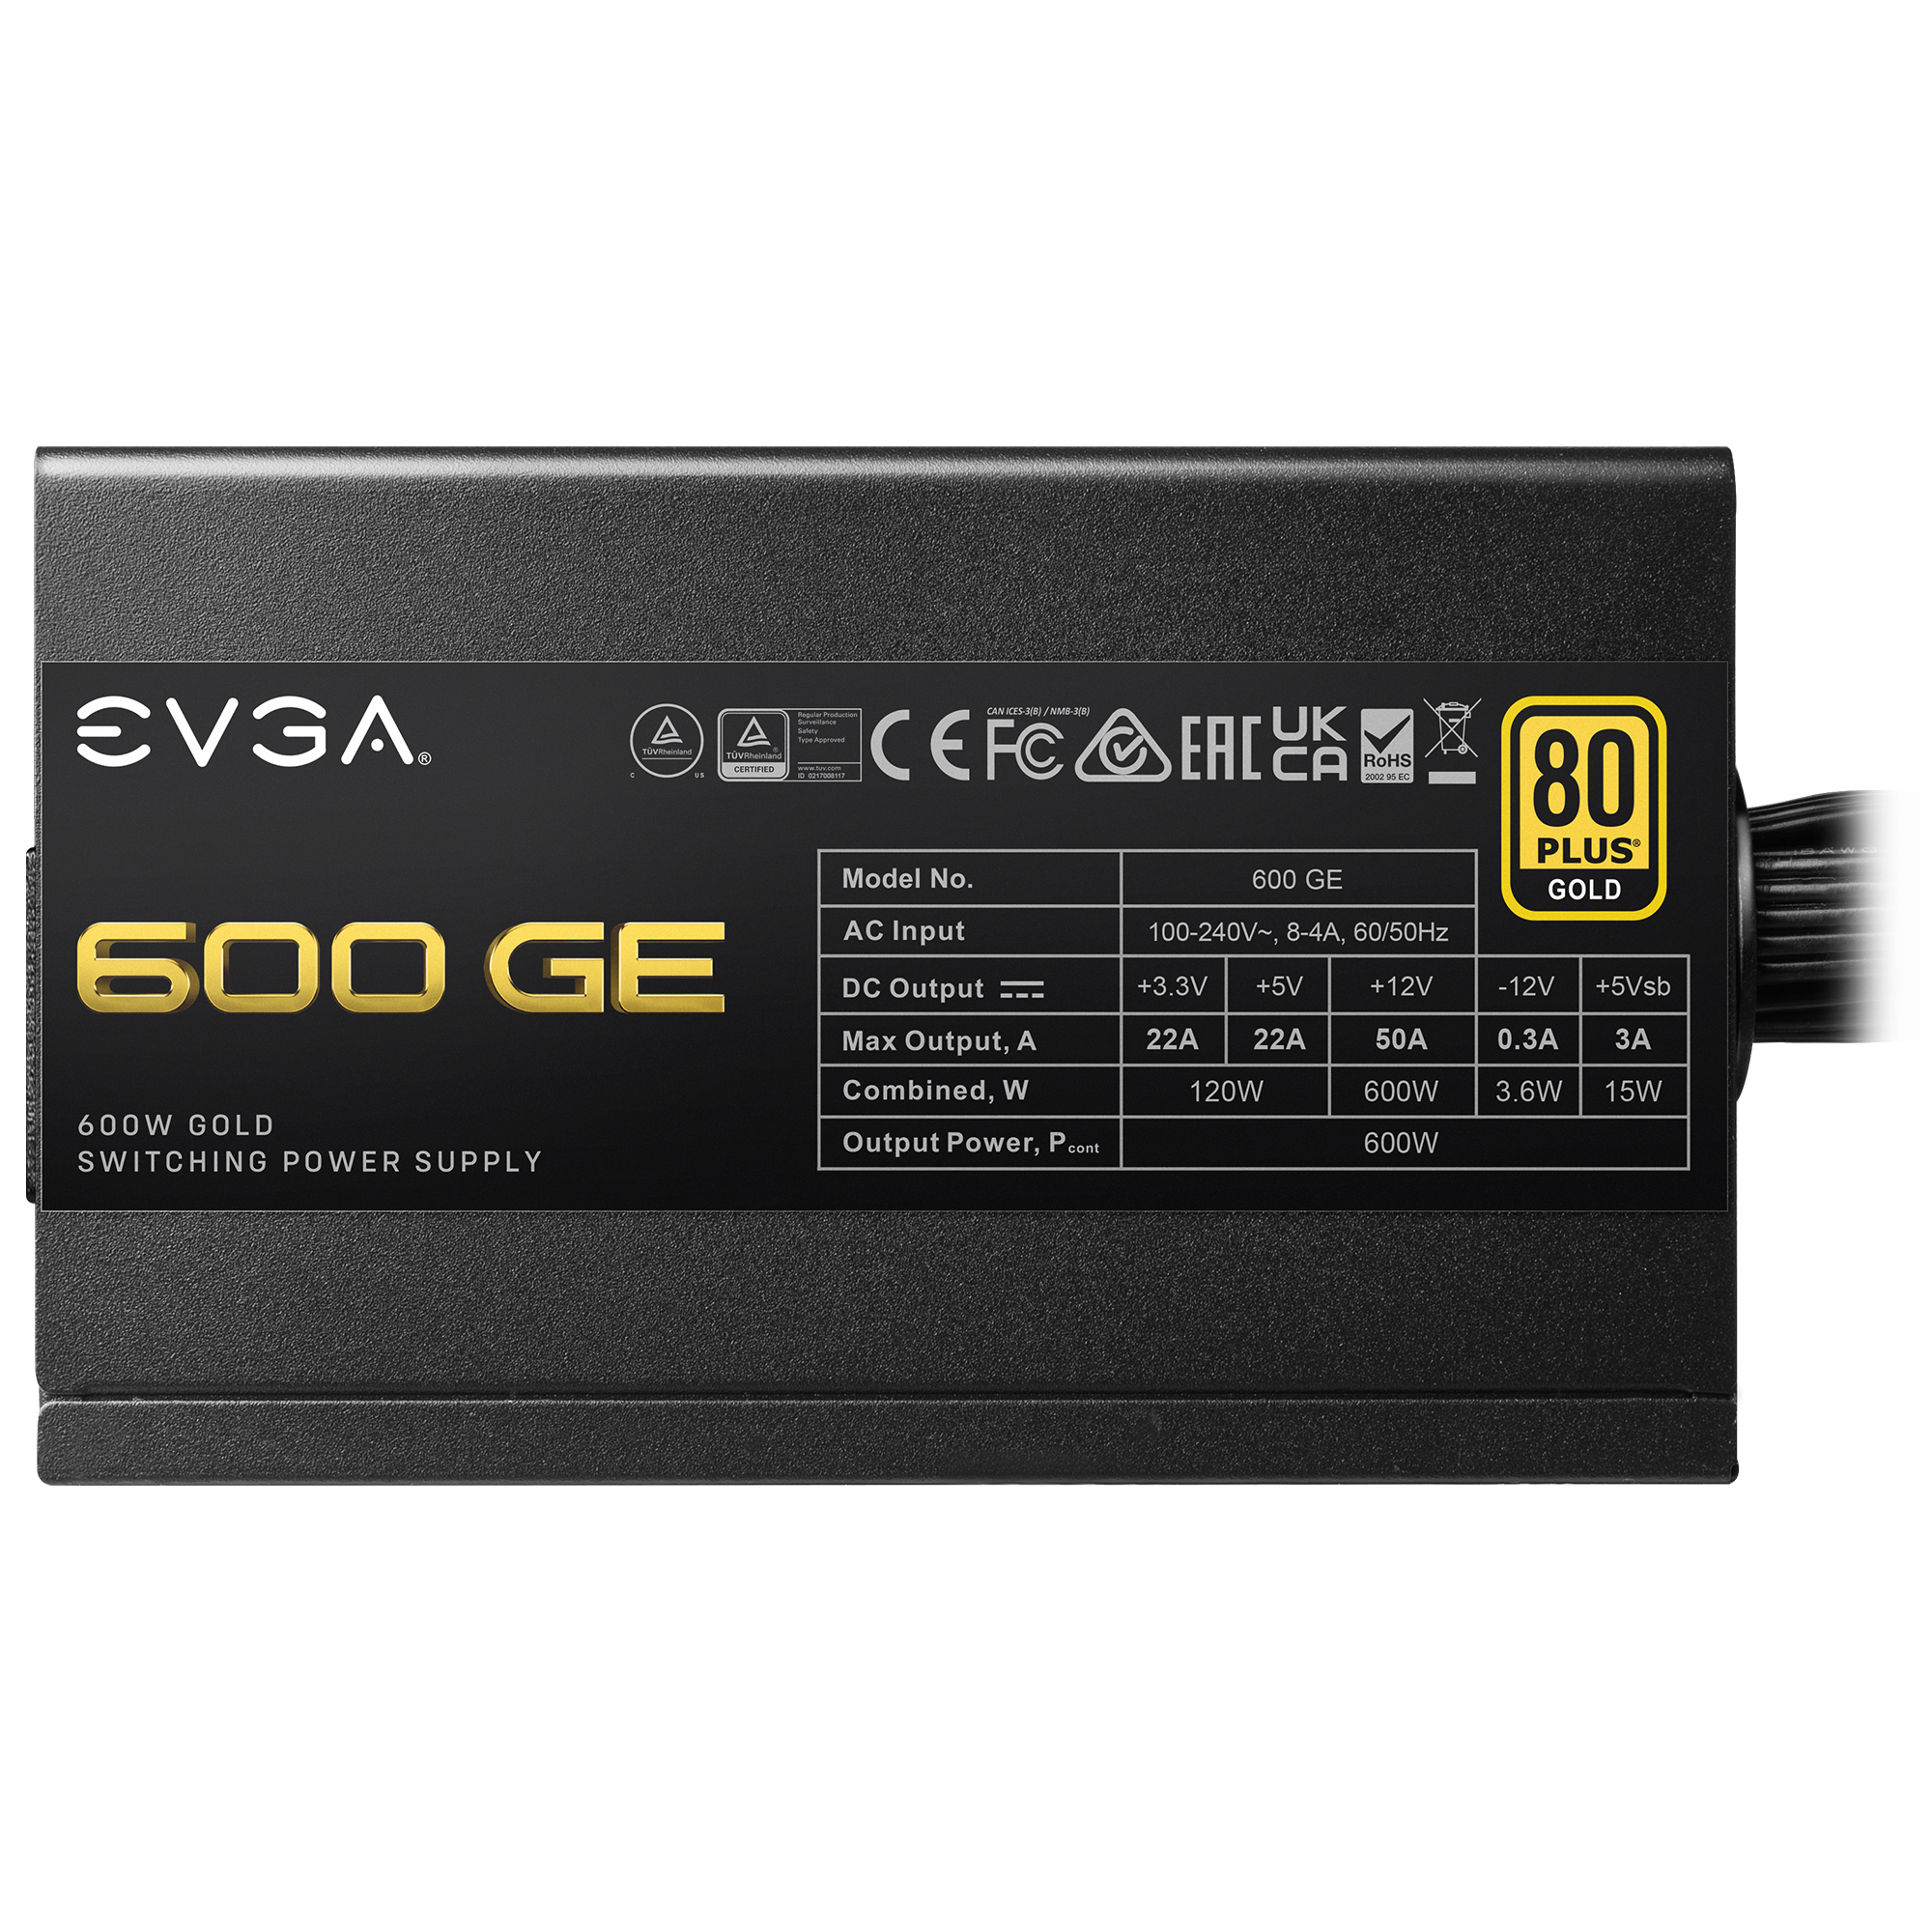 EVGA - Products - EVGA 600 GE, 80 Plus Gold 600W, Eco Mode, 5 Year Warranty,  Power Supply 200-GE-0600-V1 - 200-GE-0600-V1